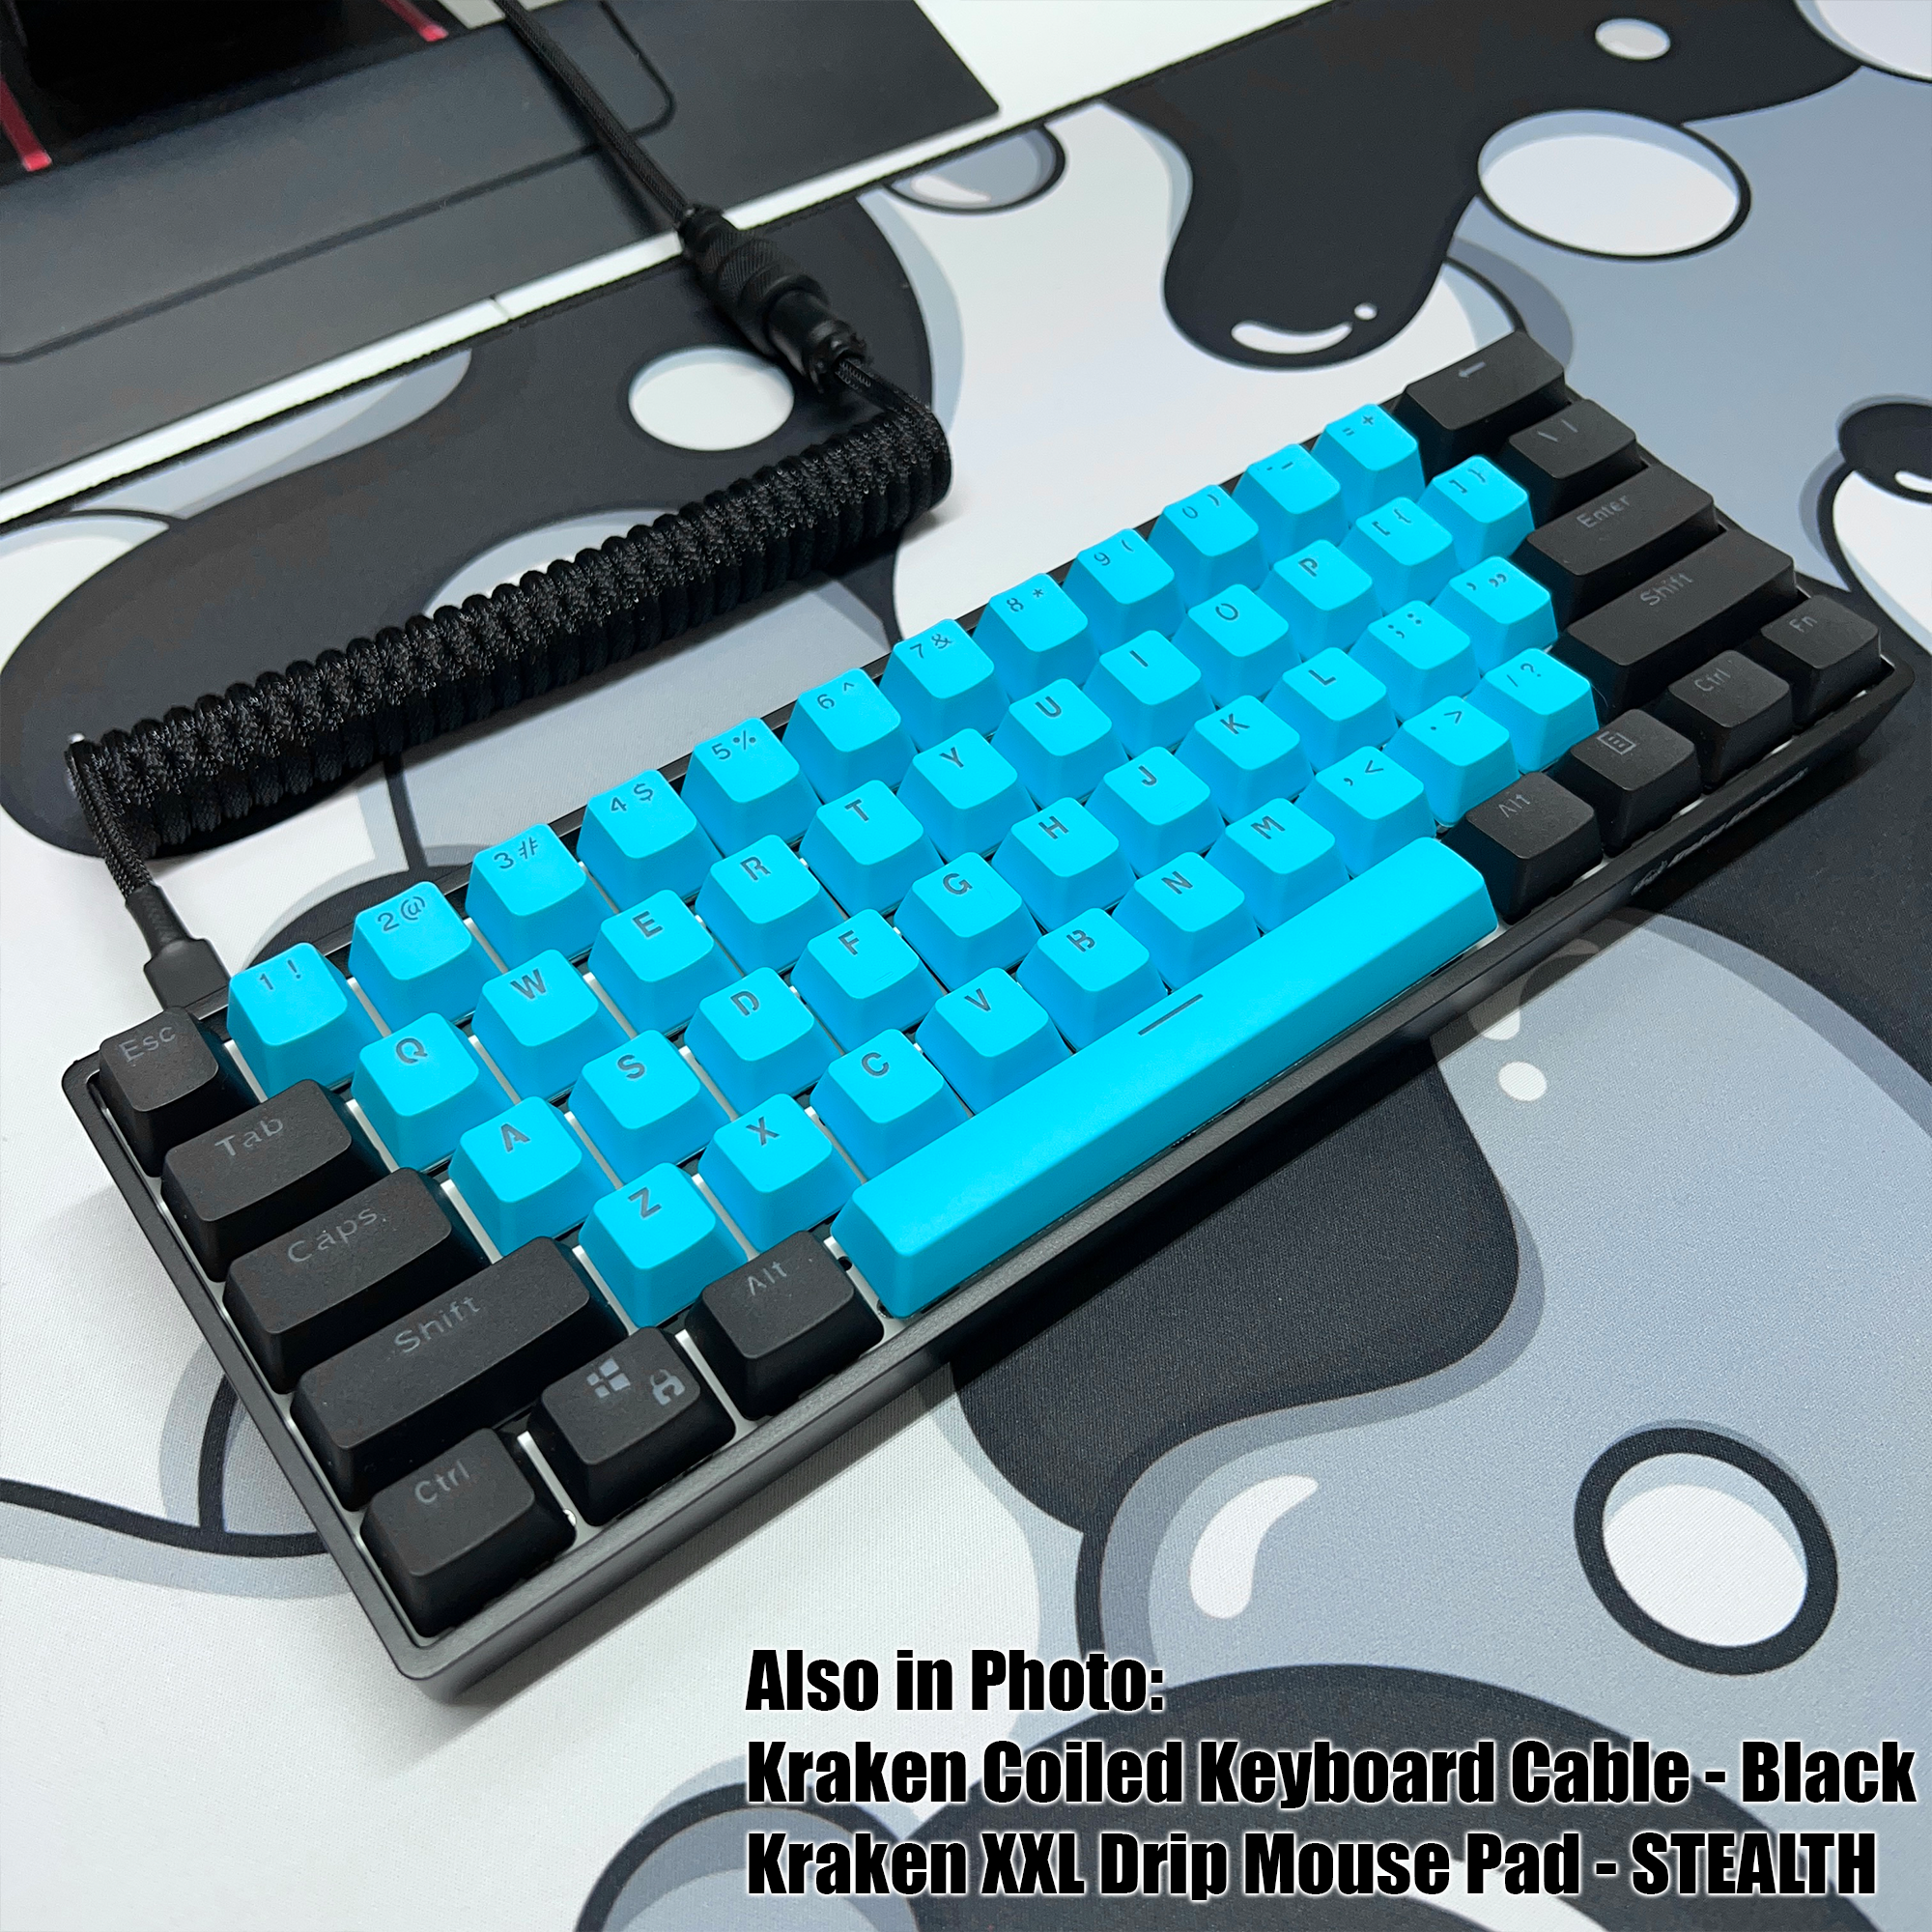 BRUISER EDITION - Kraken Pro 60% Mechanical Keyboard